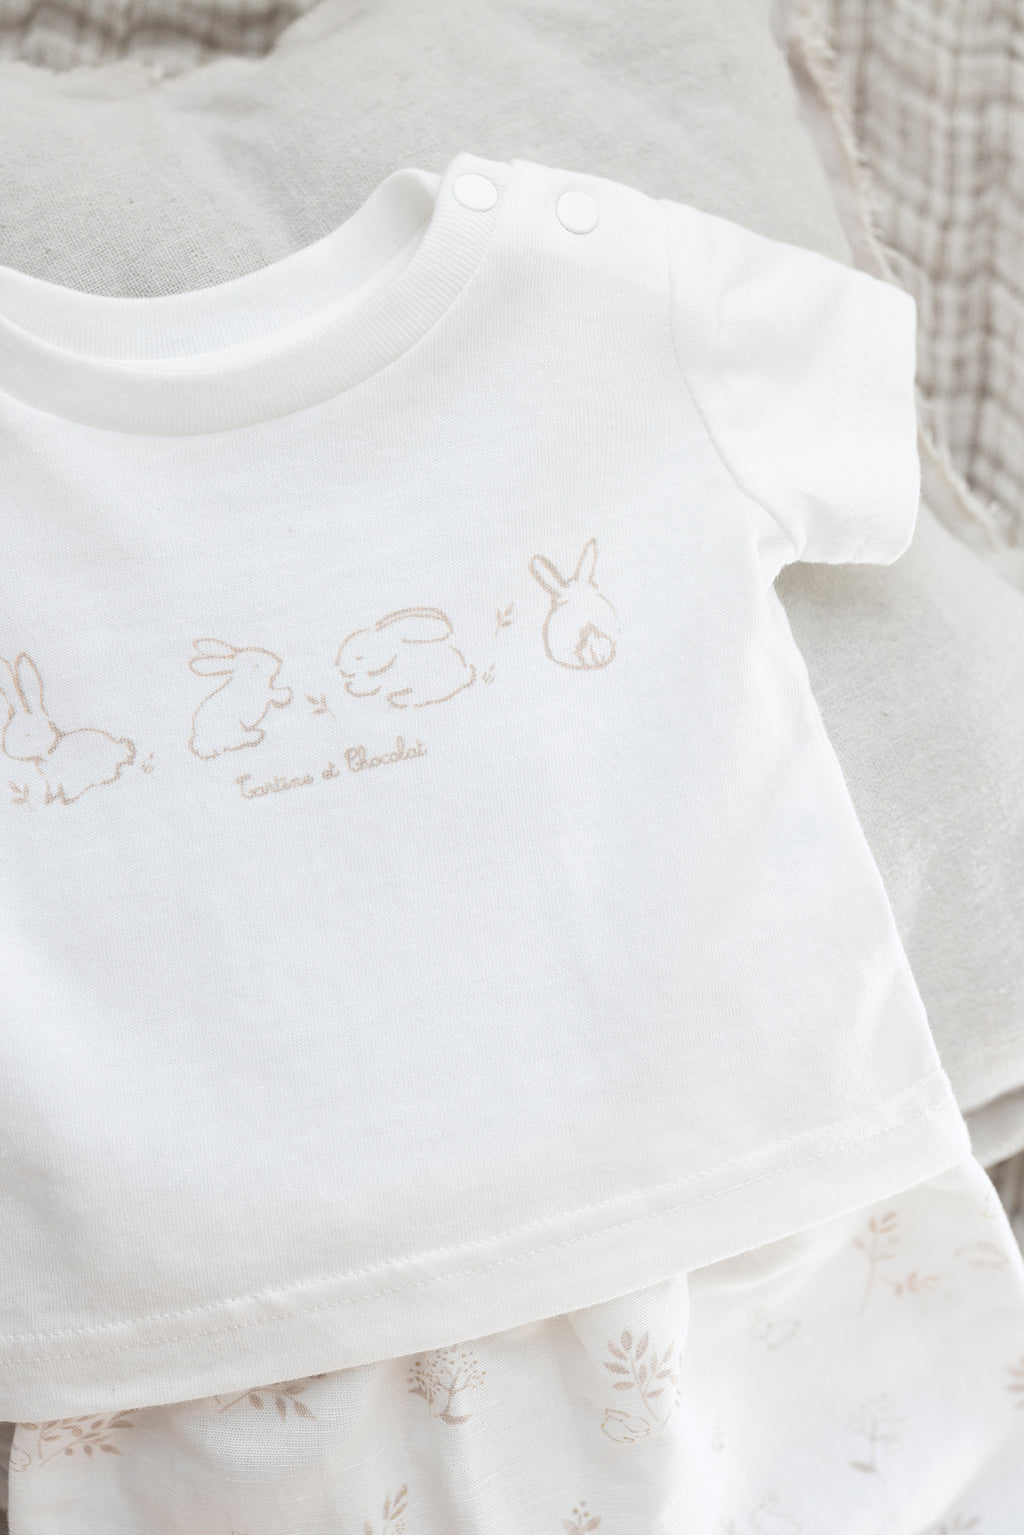 T-shirt - Ecru illustration lapin